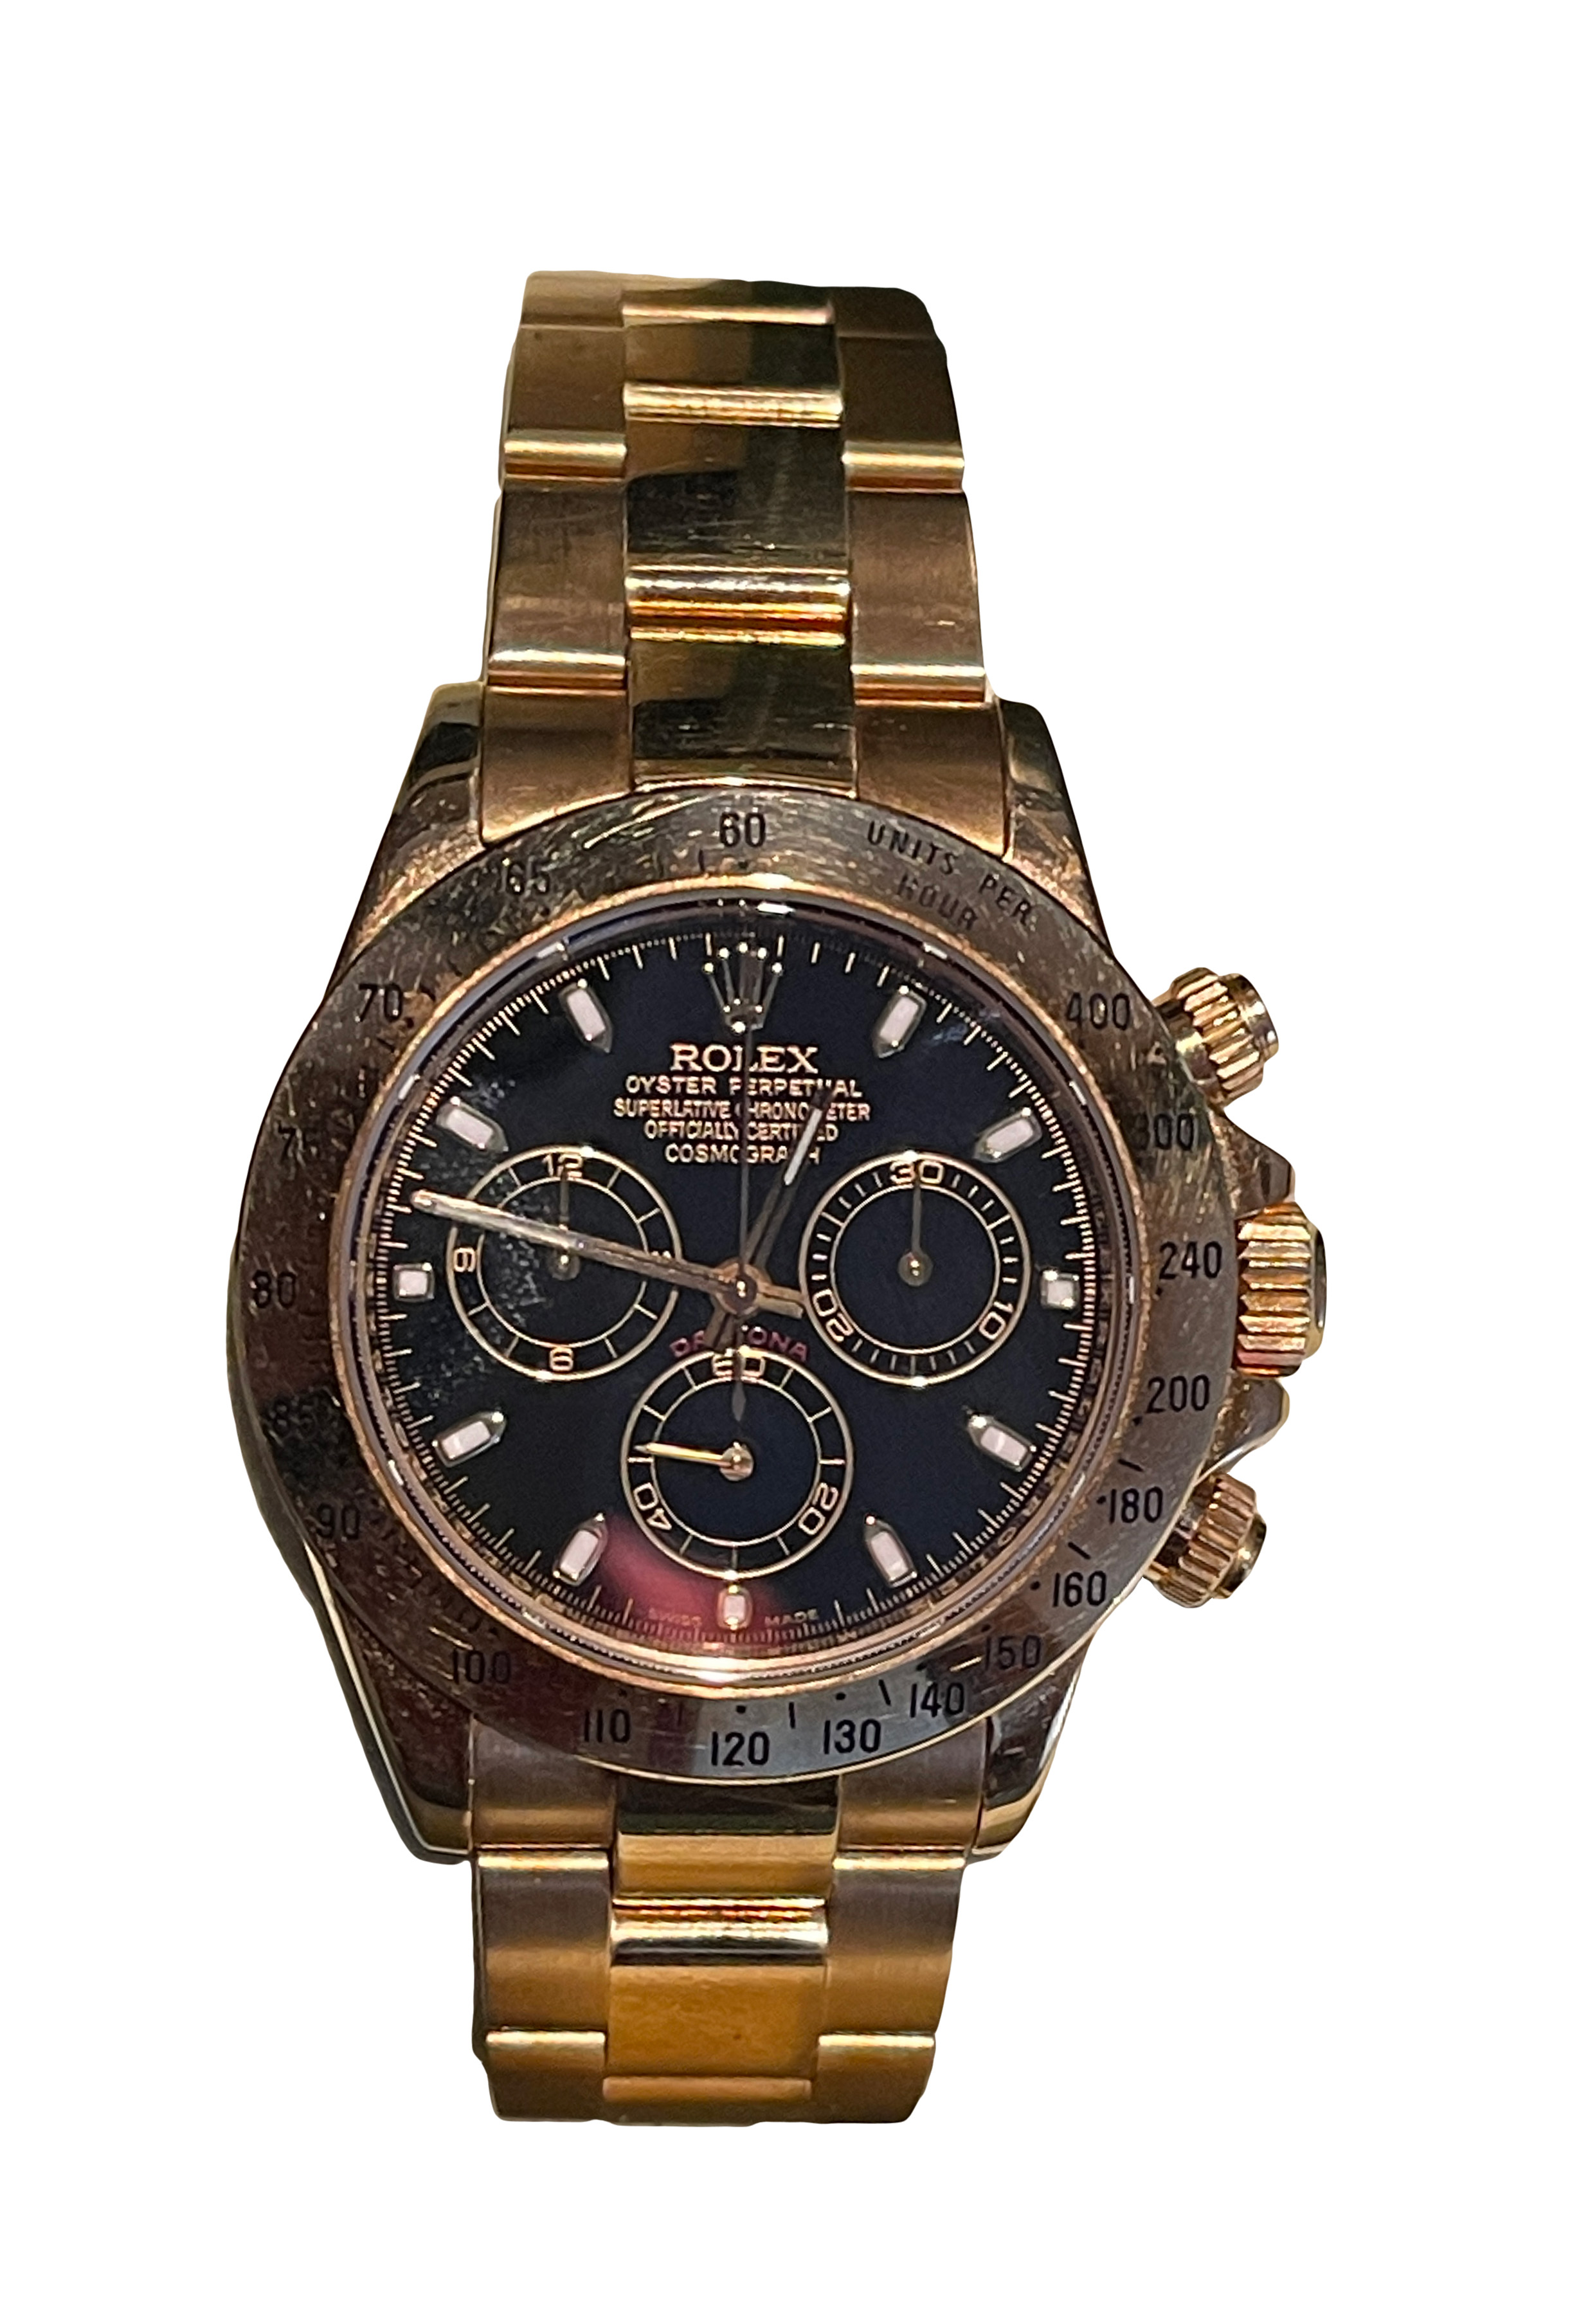 Rolex, Year 2010, #116528 40mm, Movement AUTOMATIC Chronograph, Model: Daytona Yellow Gold, Black